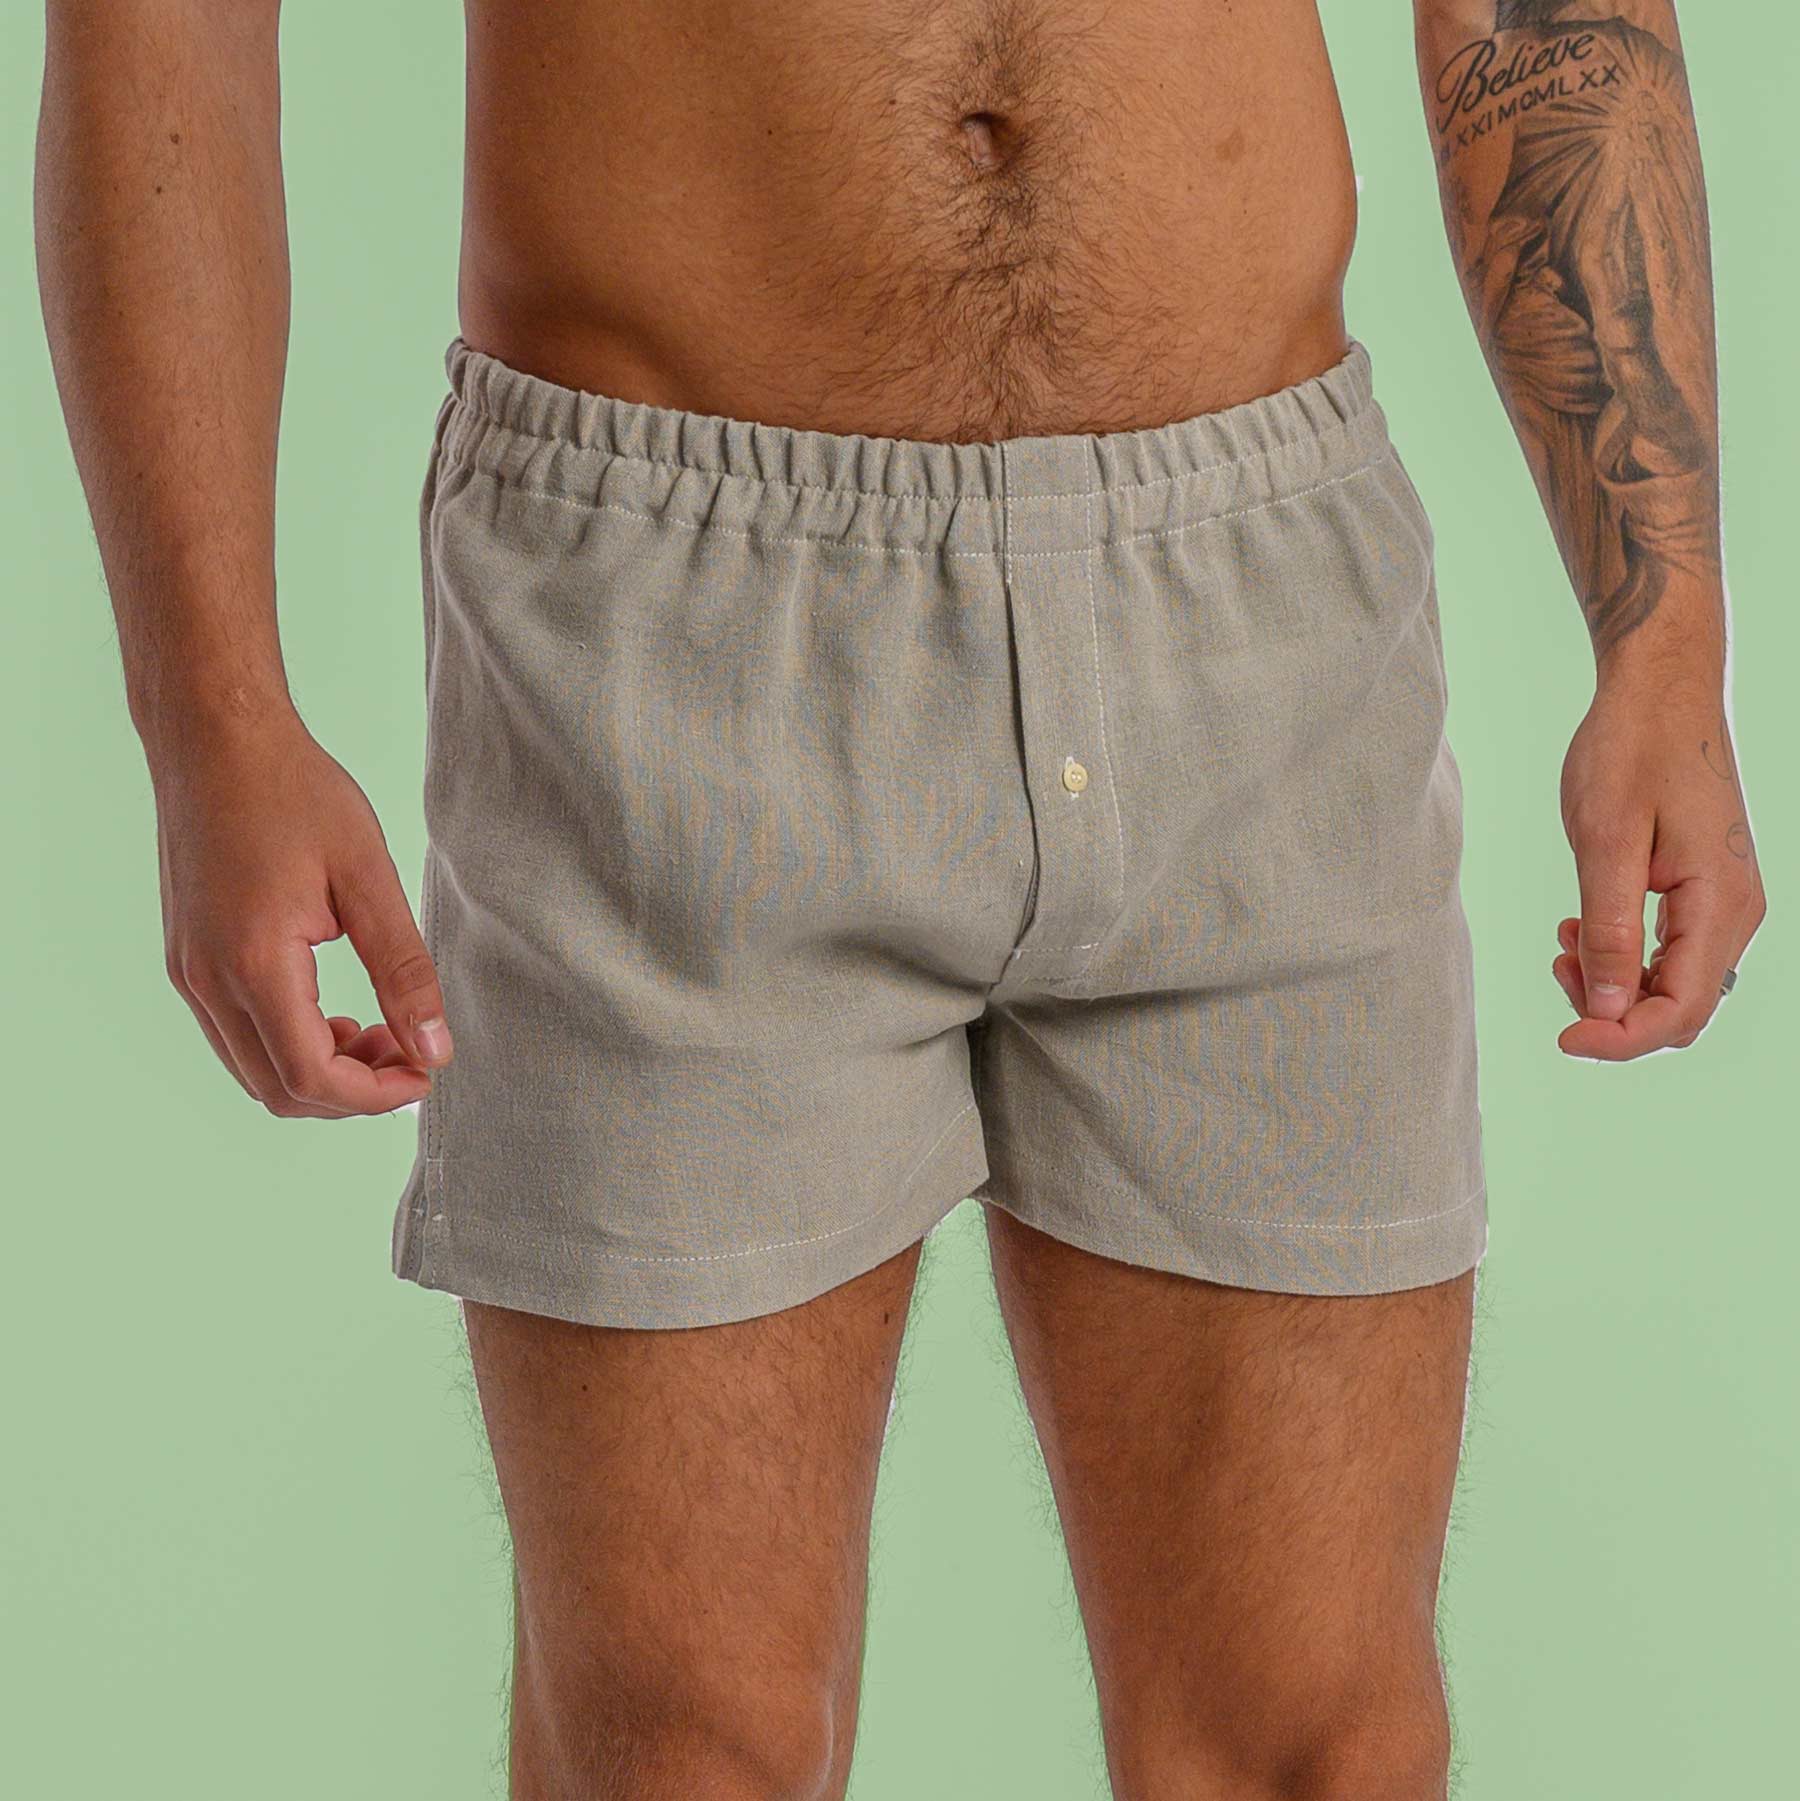 Latex Free Man Underwear, Natural Linen Sleep Shorts, Organic